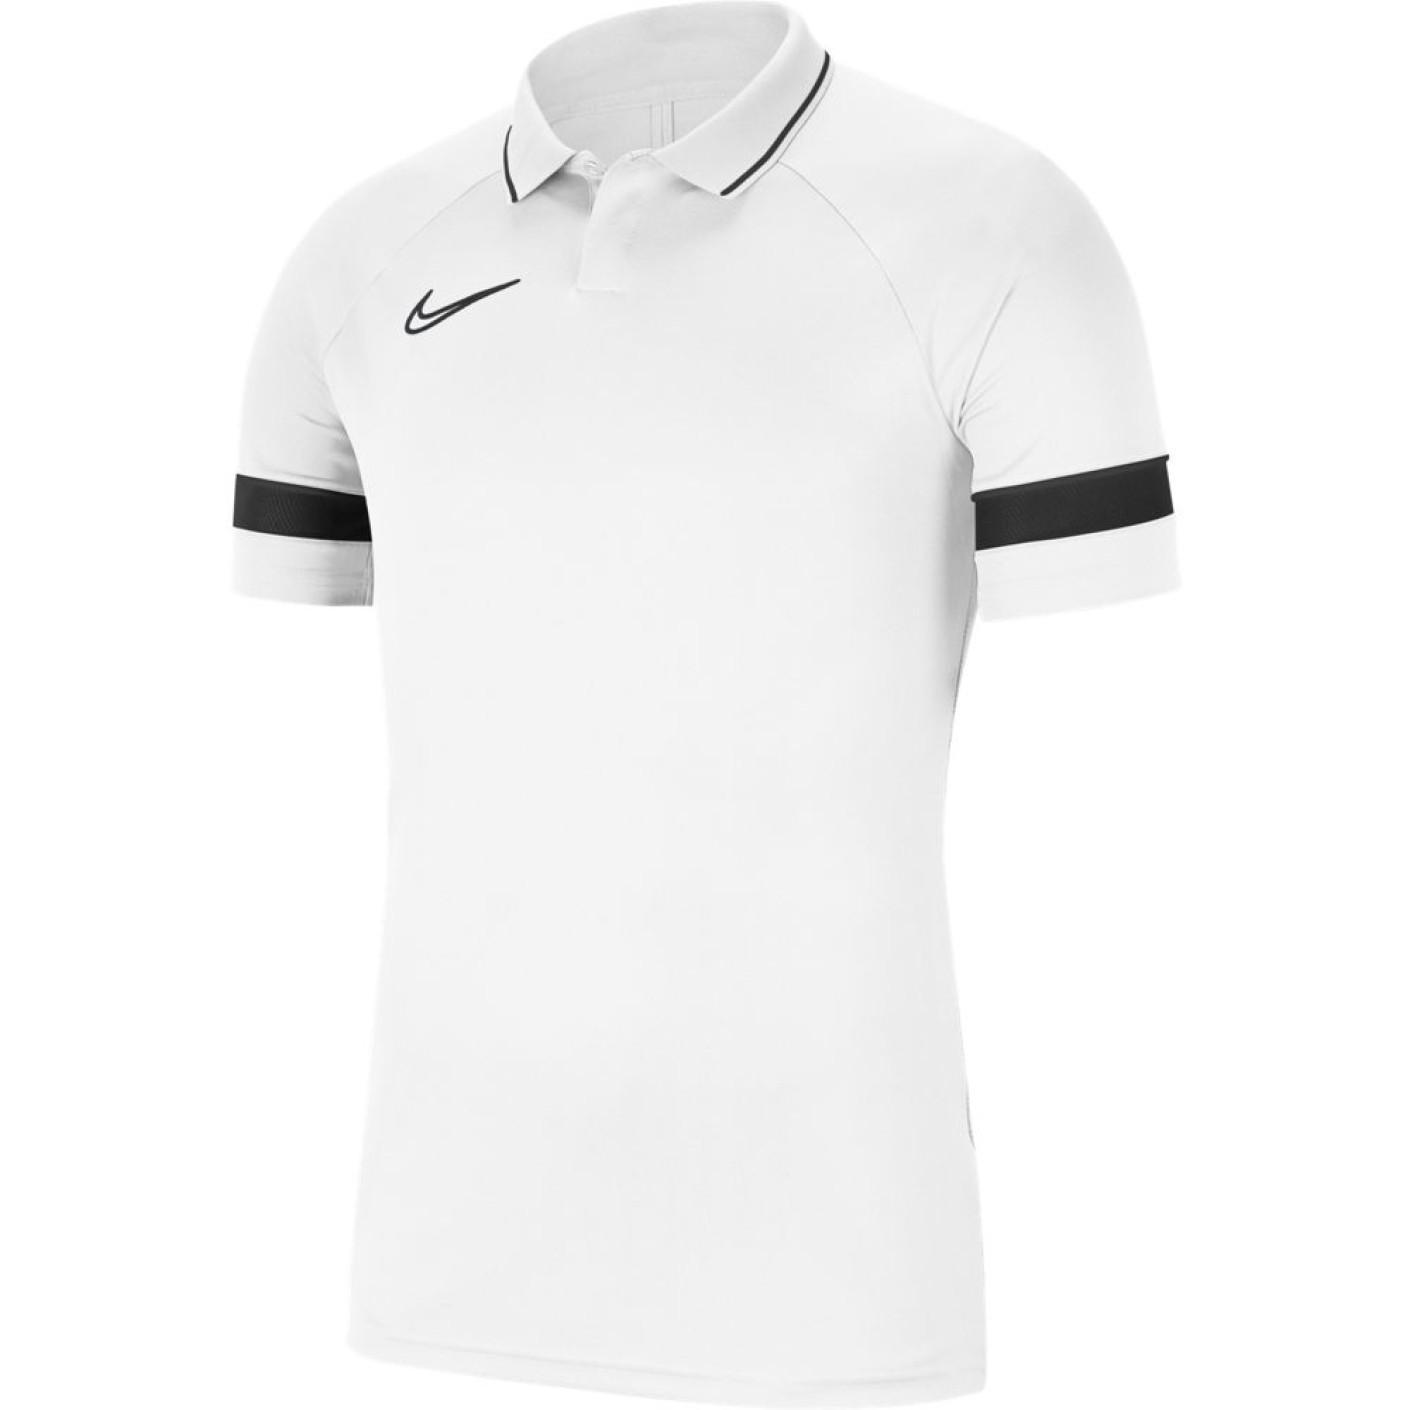 Polo Nike Dri-Fit Academy 21 blanc noir